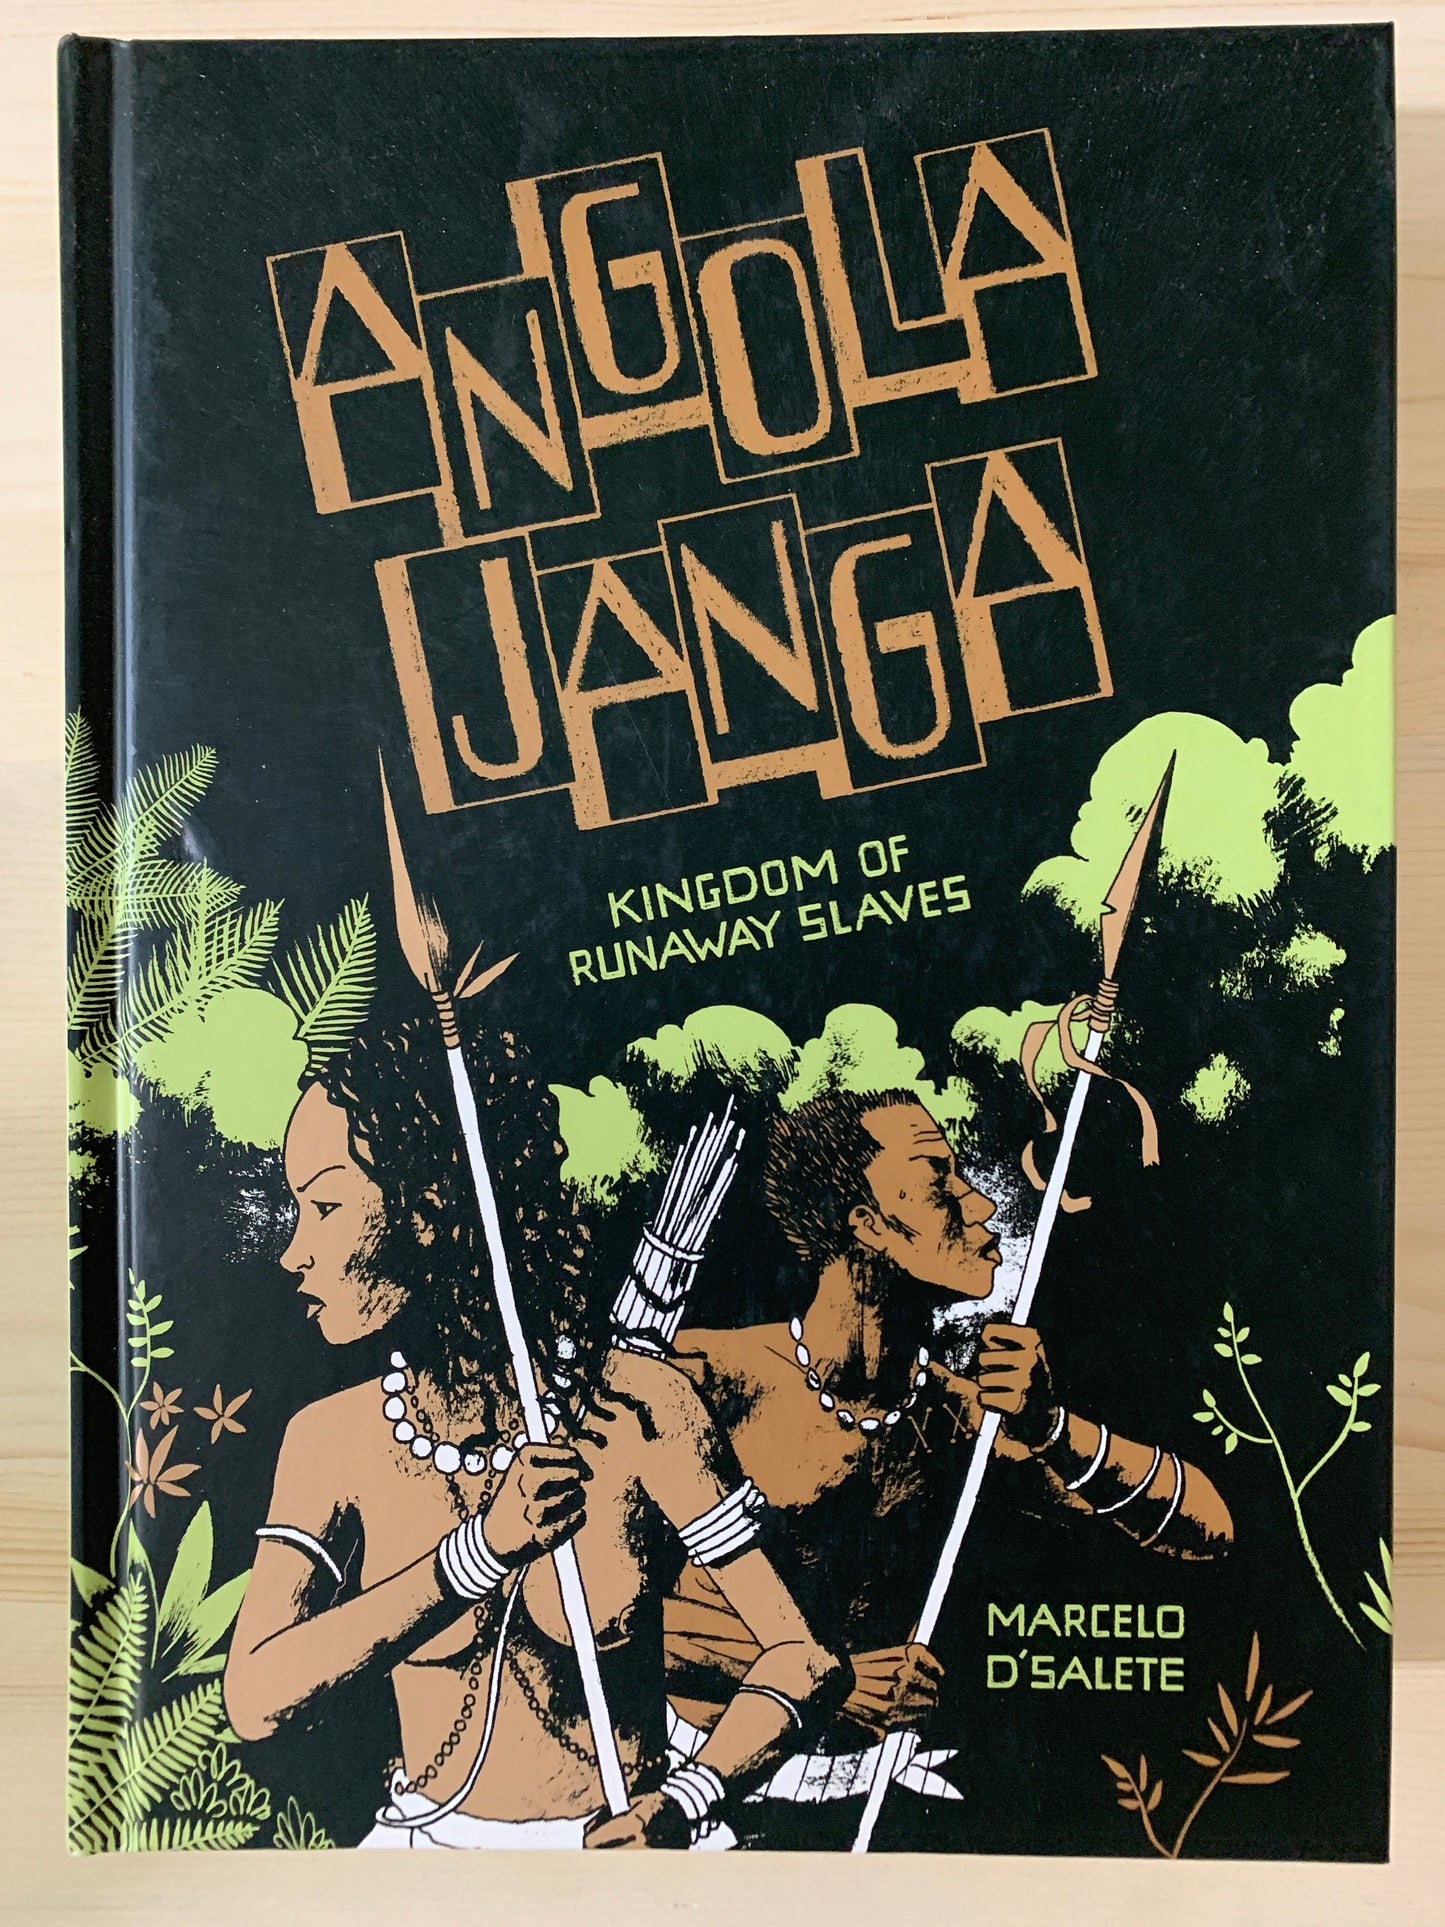 Angola Janga: Kingdom of Runaway Slaves